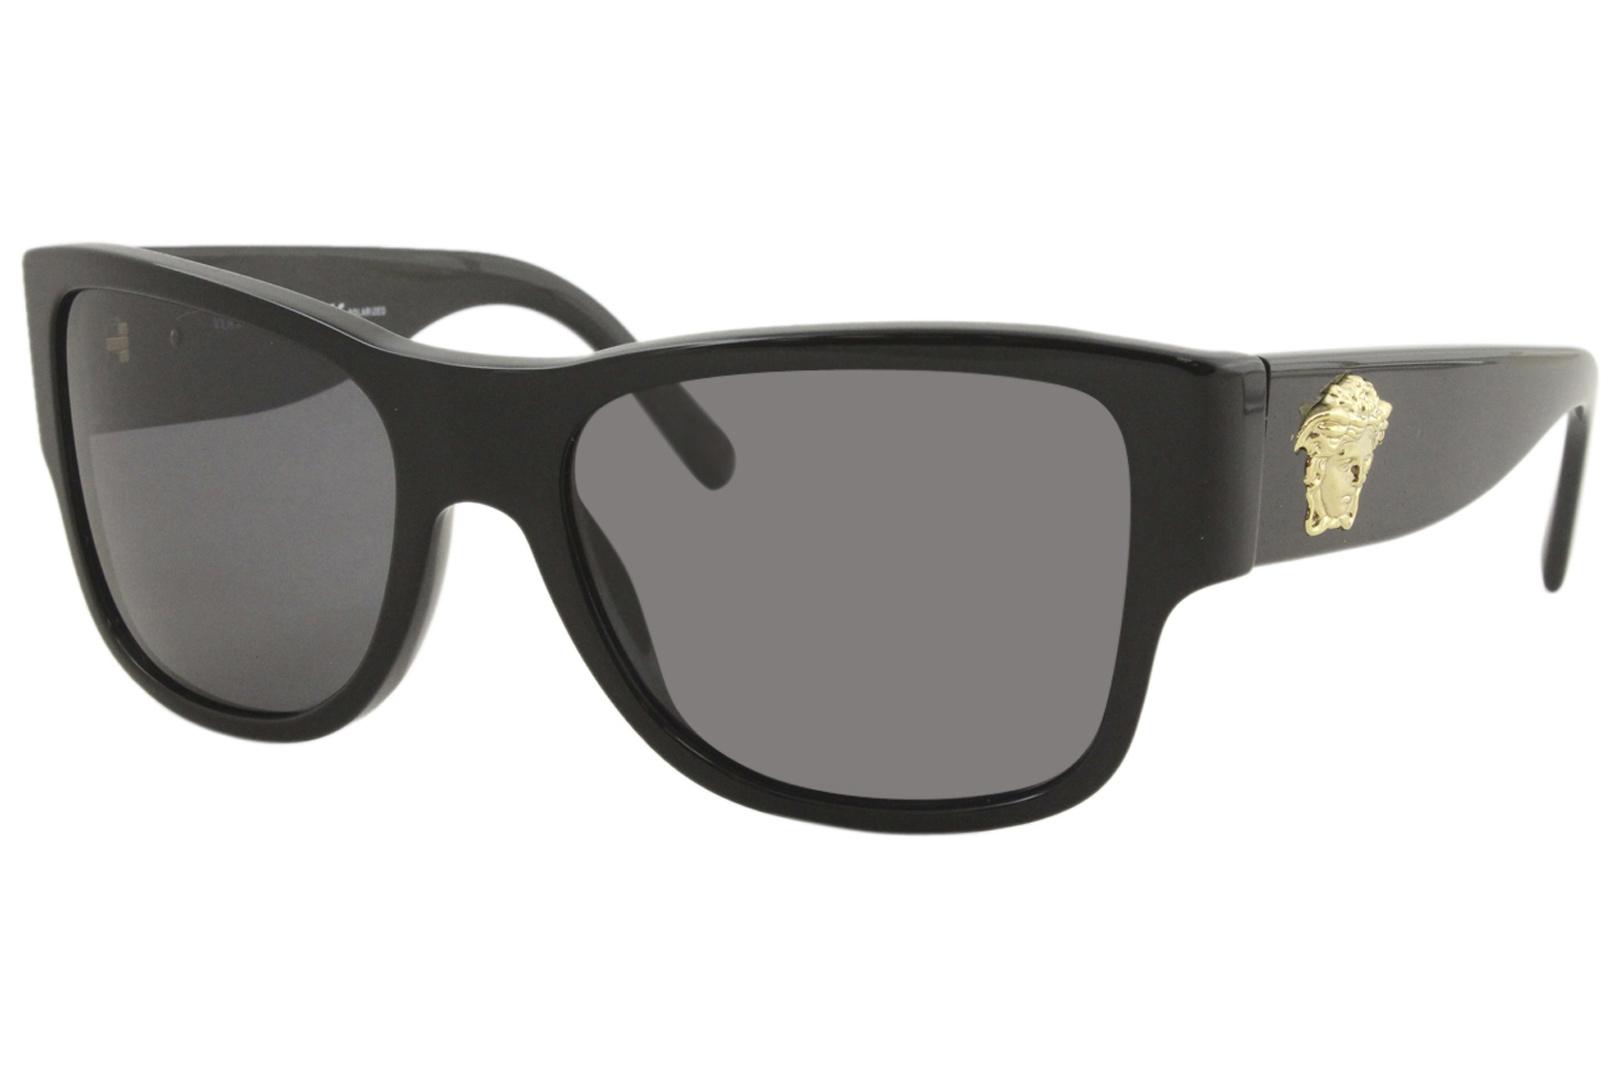 versace sunglasses 4275